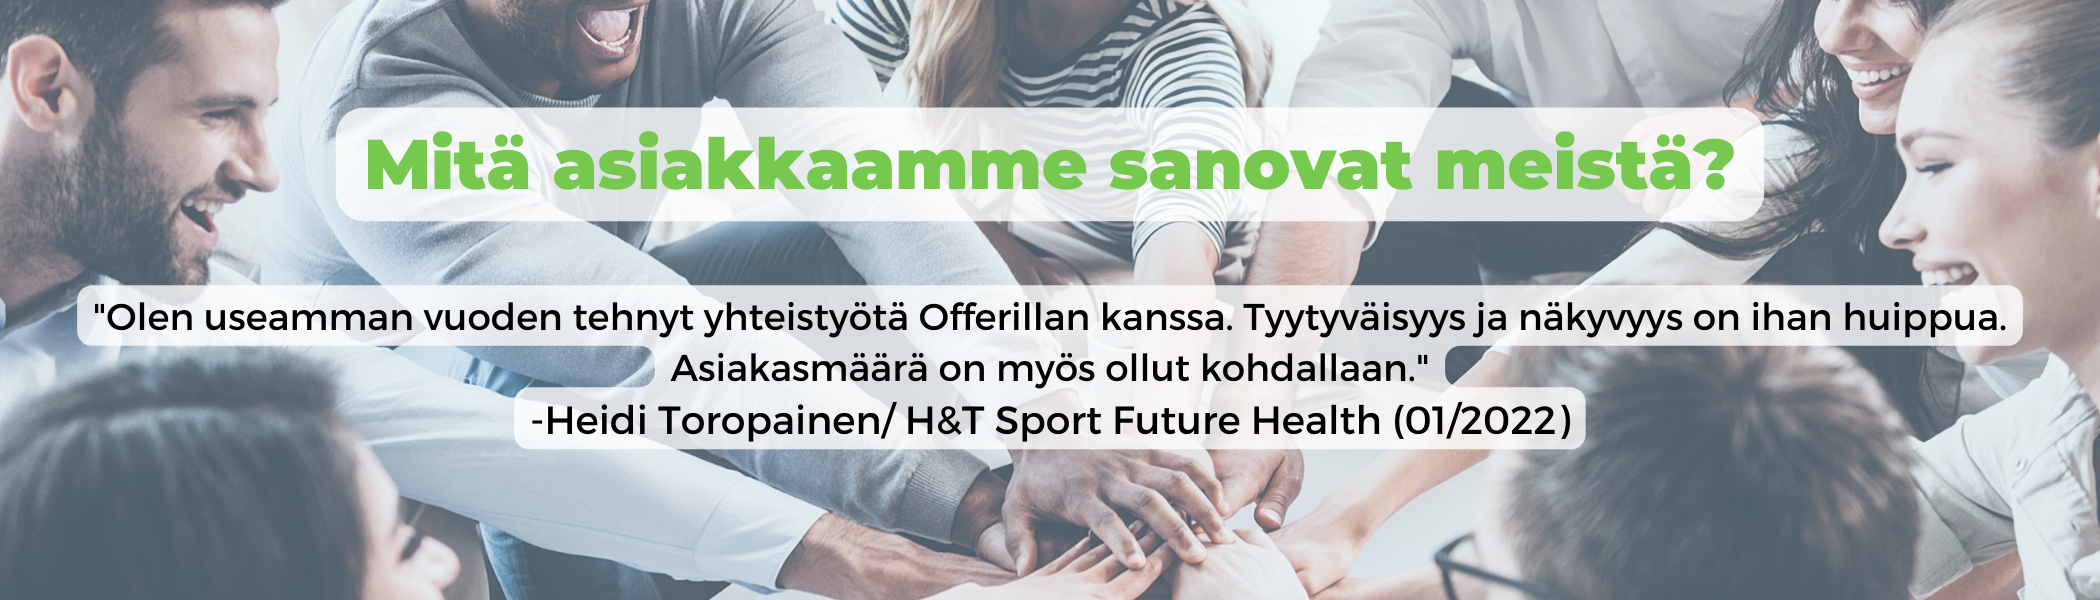 Referenssi. Heidi Toropainen, H&T Sport Future Health